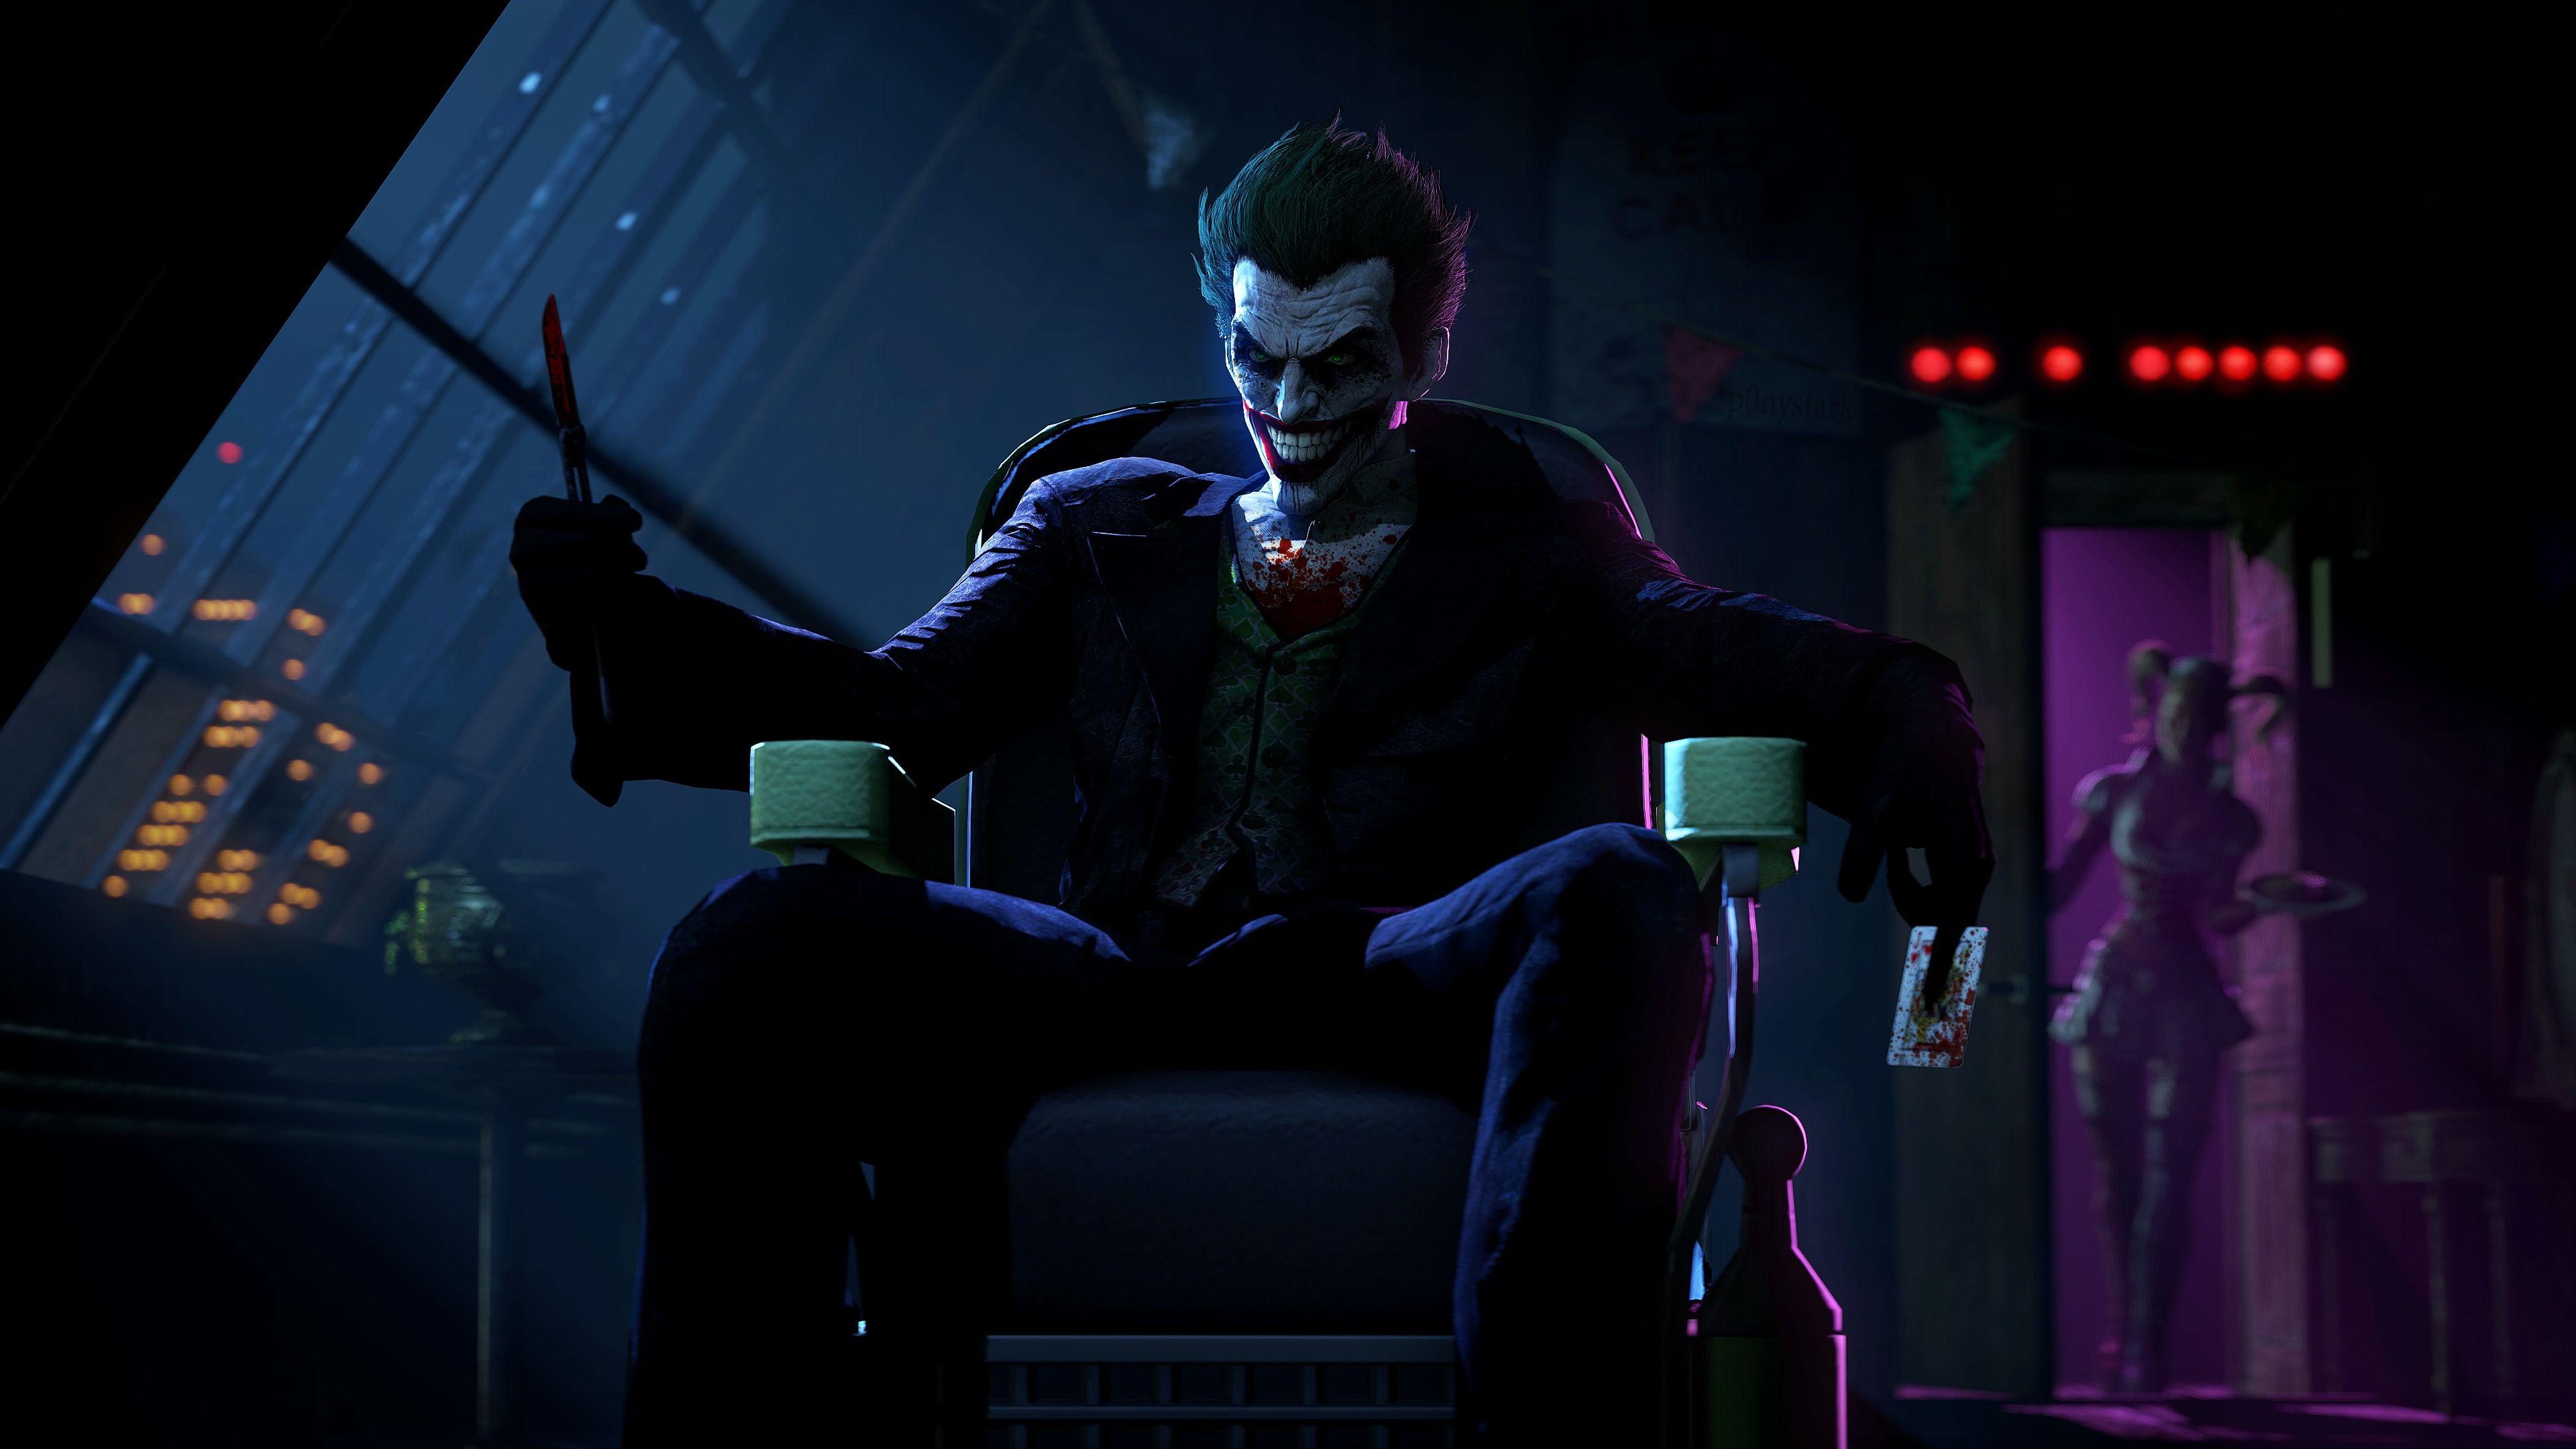 Joker In Batman Arkham Origins, HD Games, 4k Wallpaper, Image